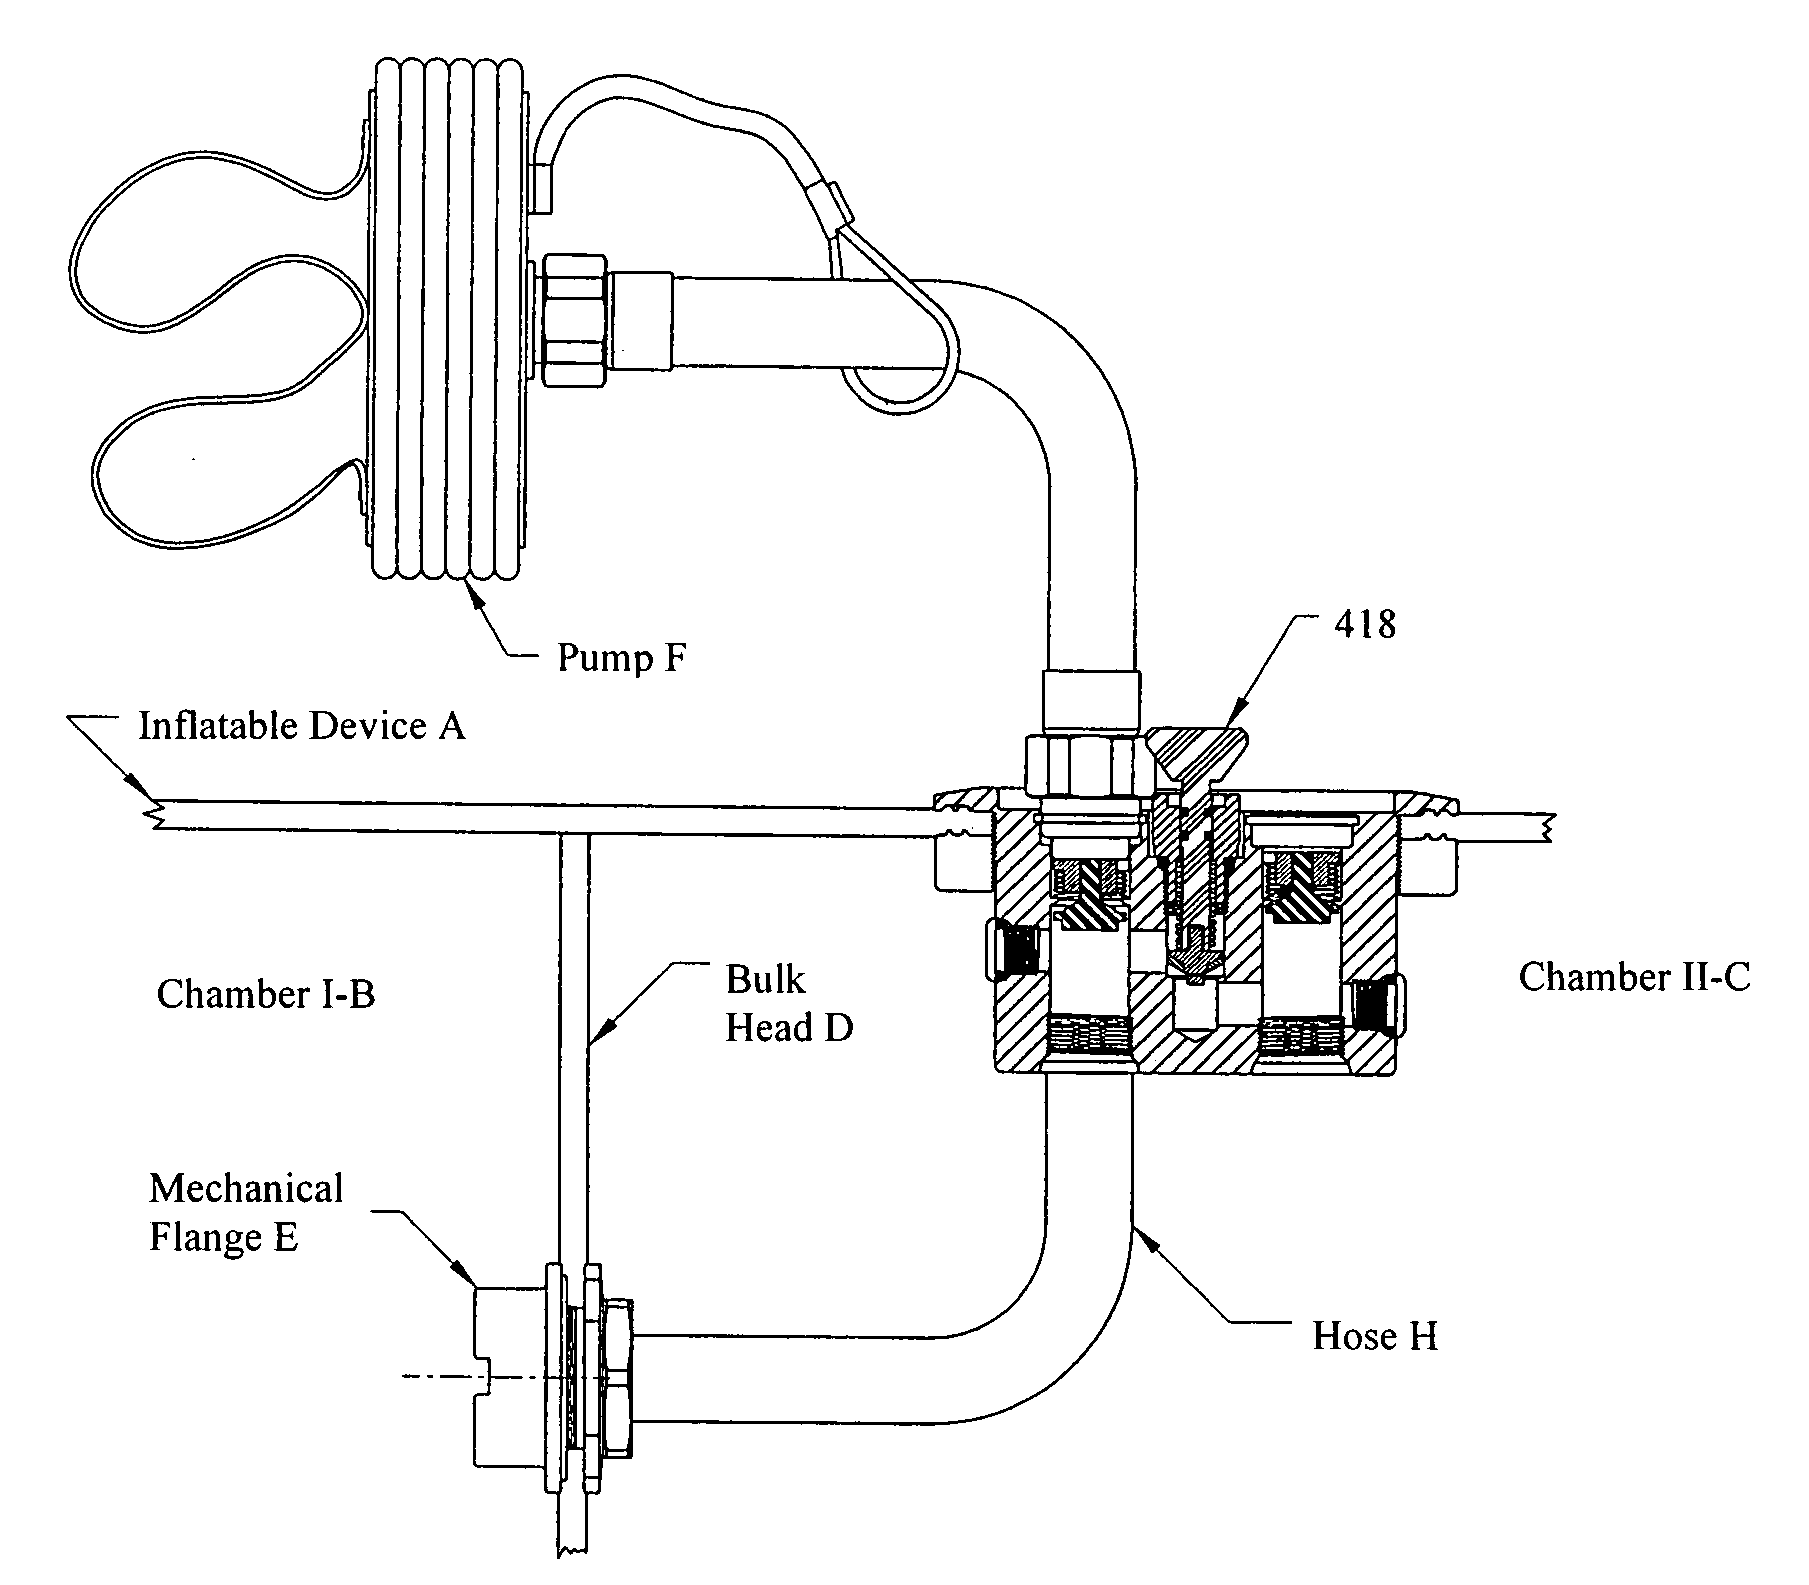 Internal cross over valve